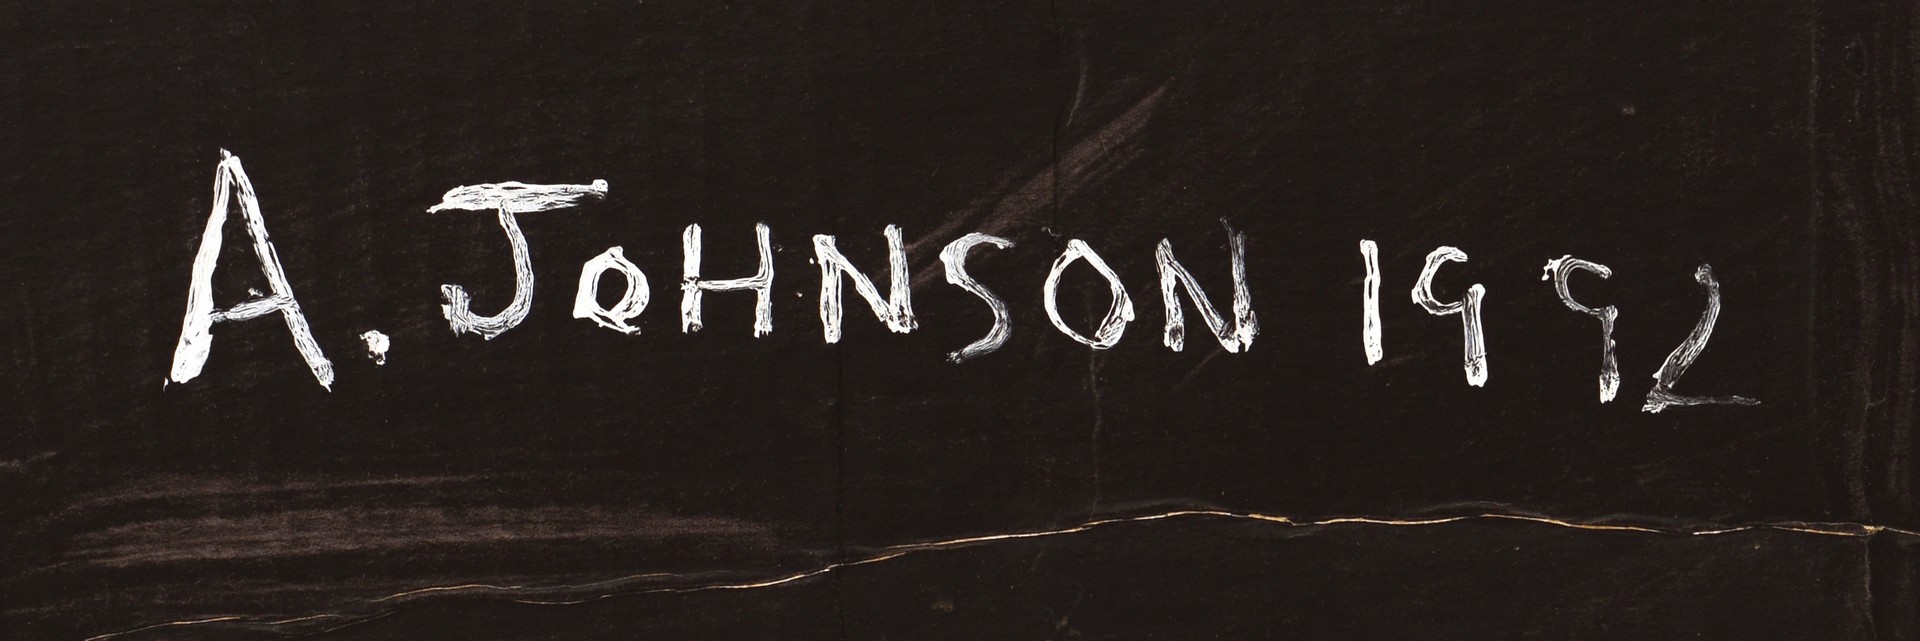 Lot 553: Anderson Johnson, outsider art portrait